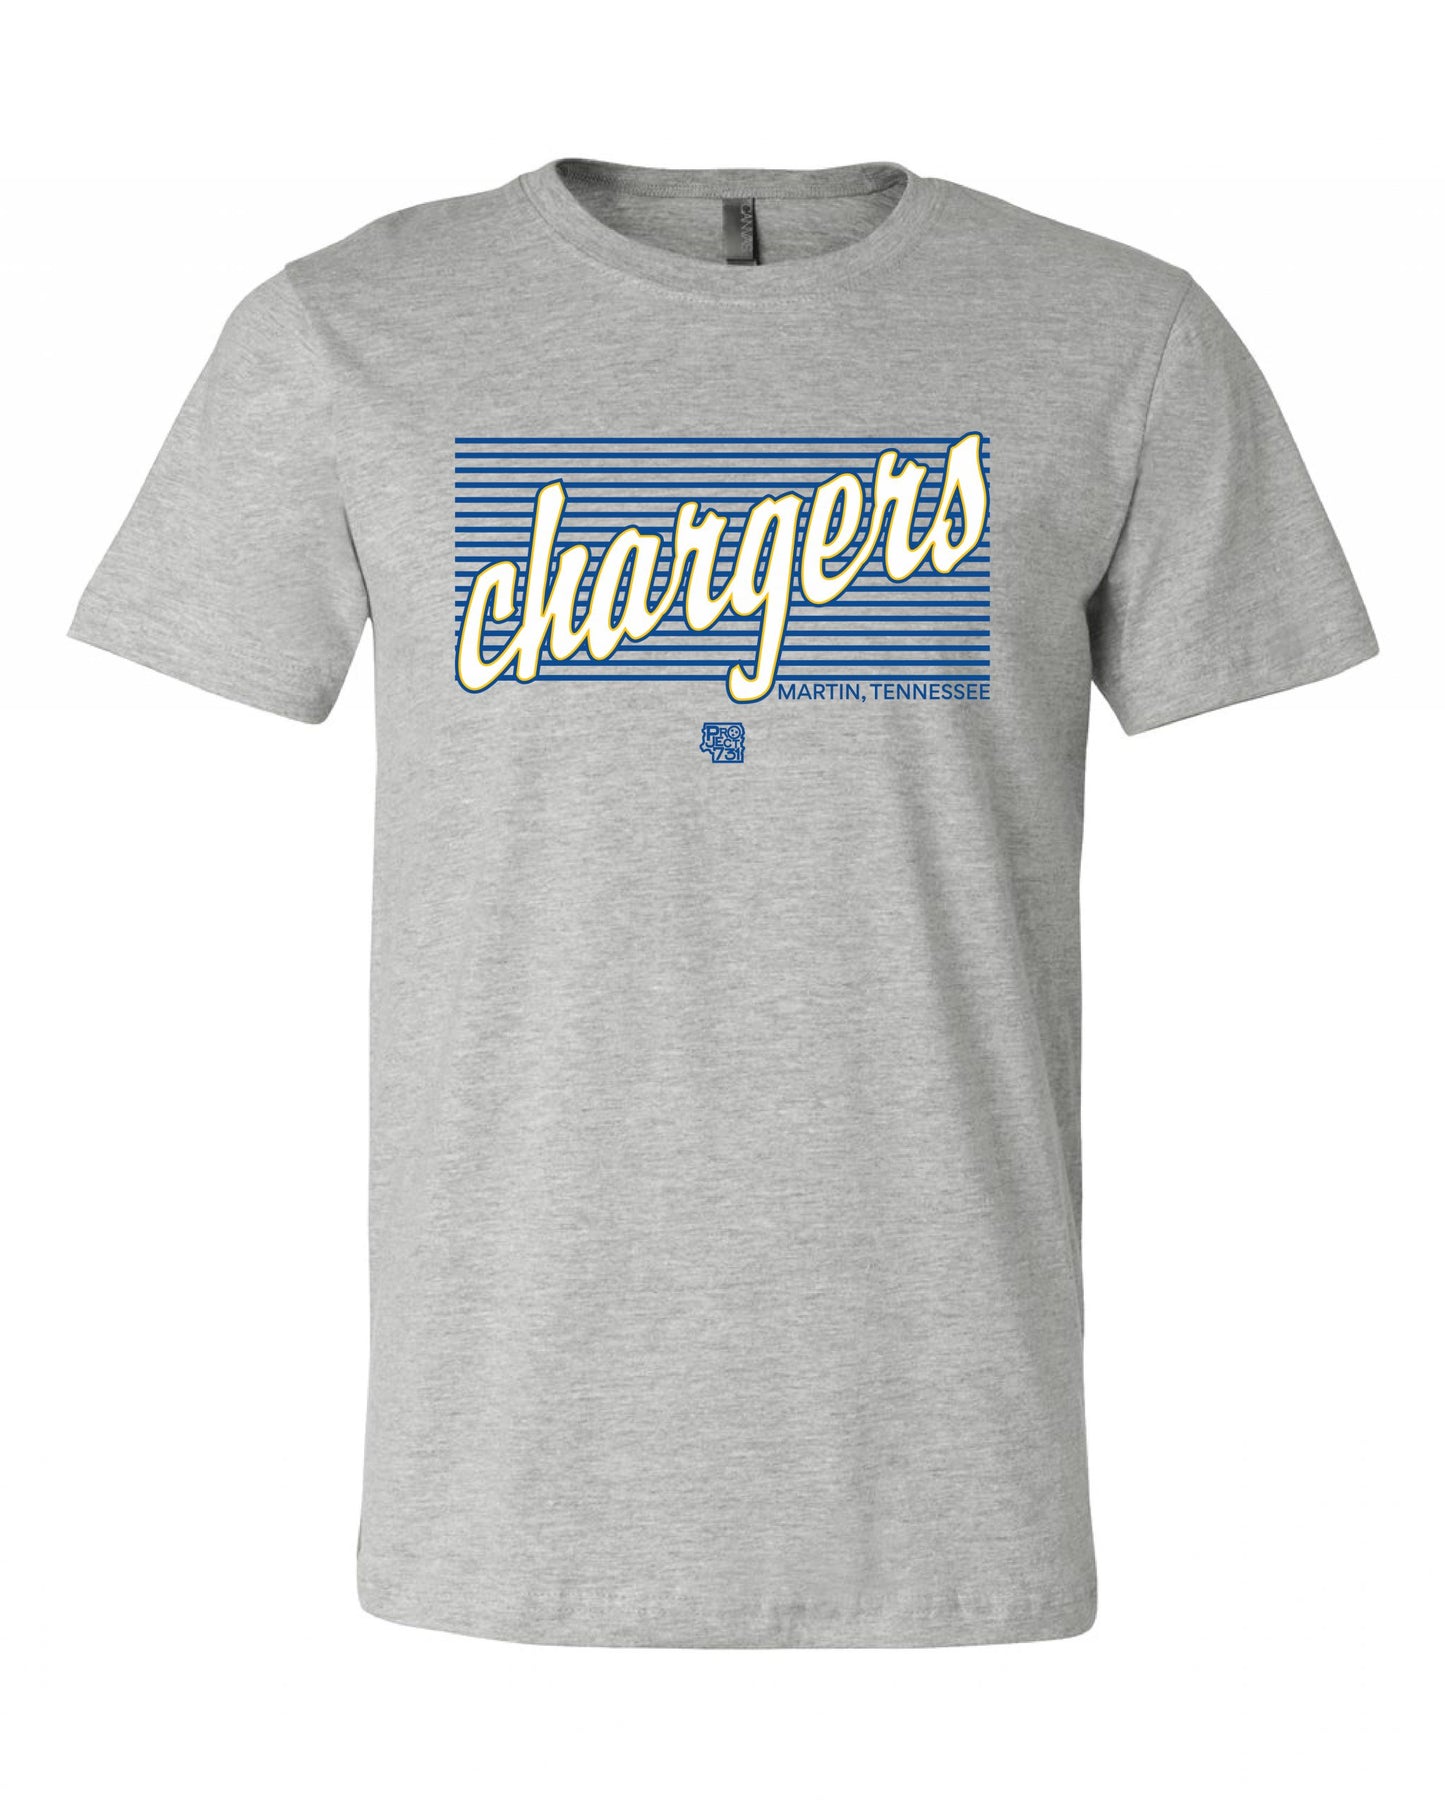 Chargers Slant T-shirt